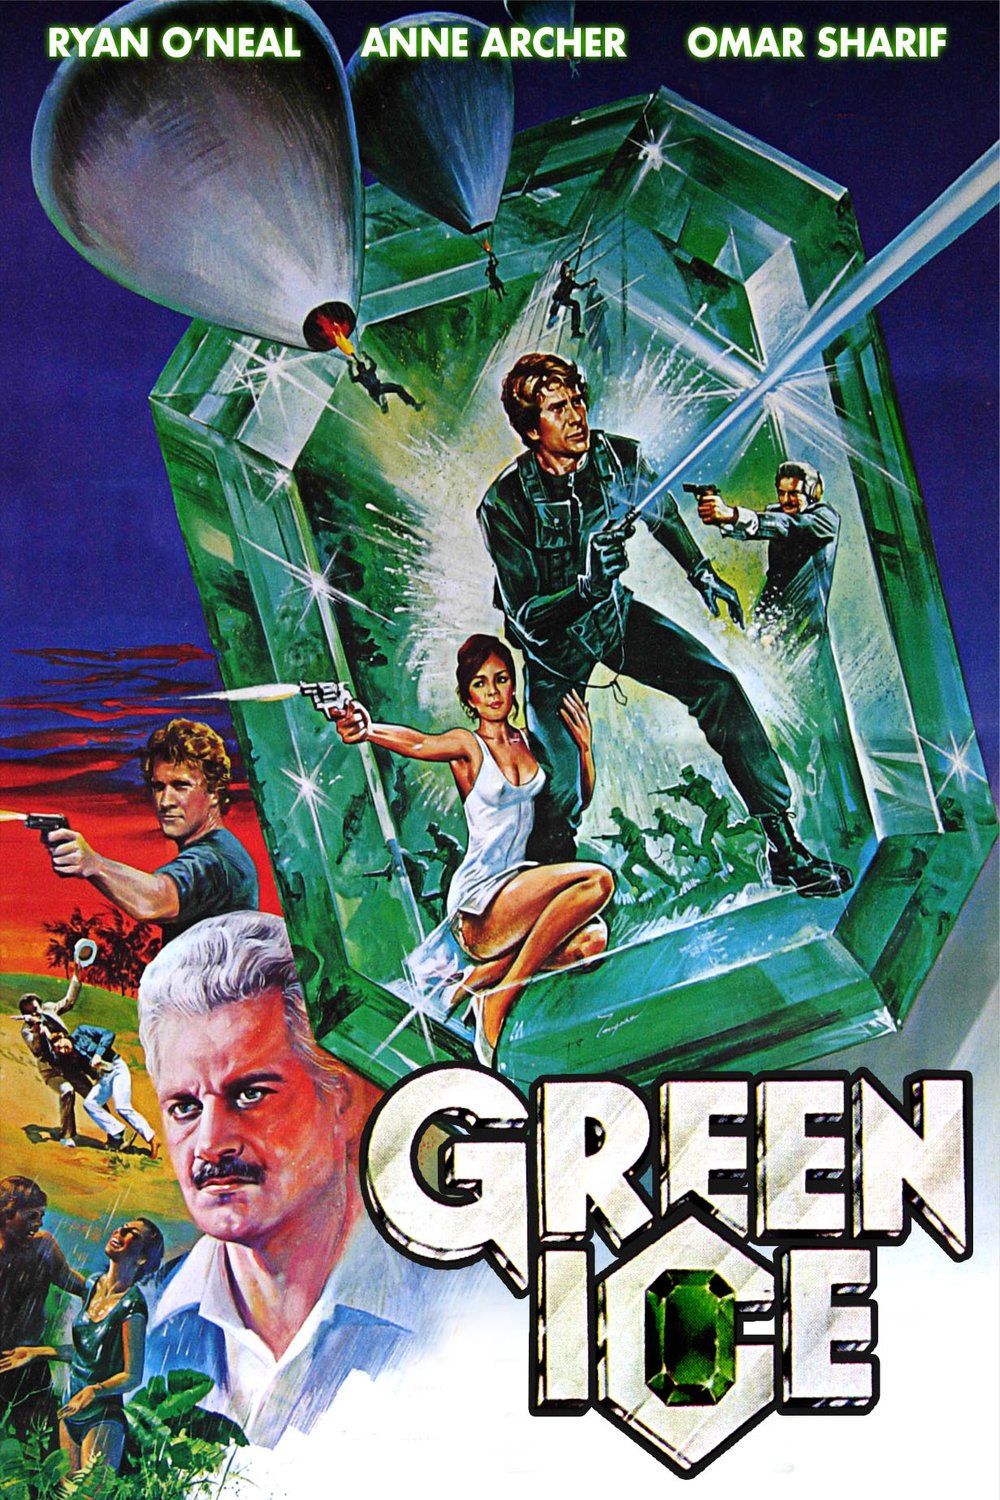 L'affiche du film Green Ice